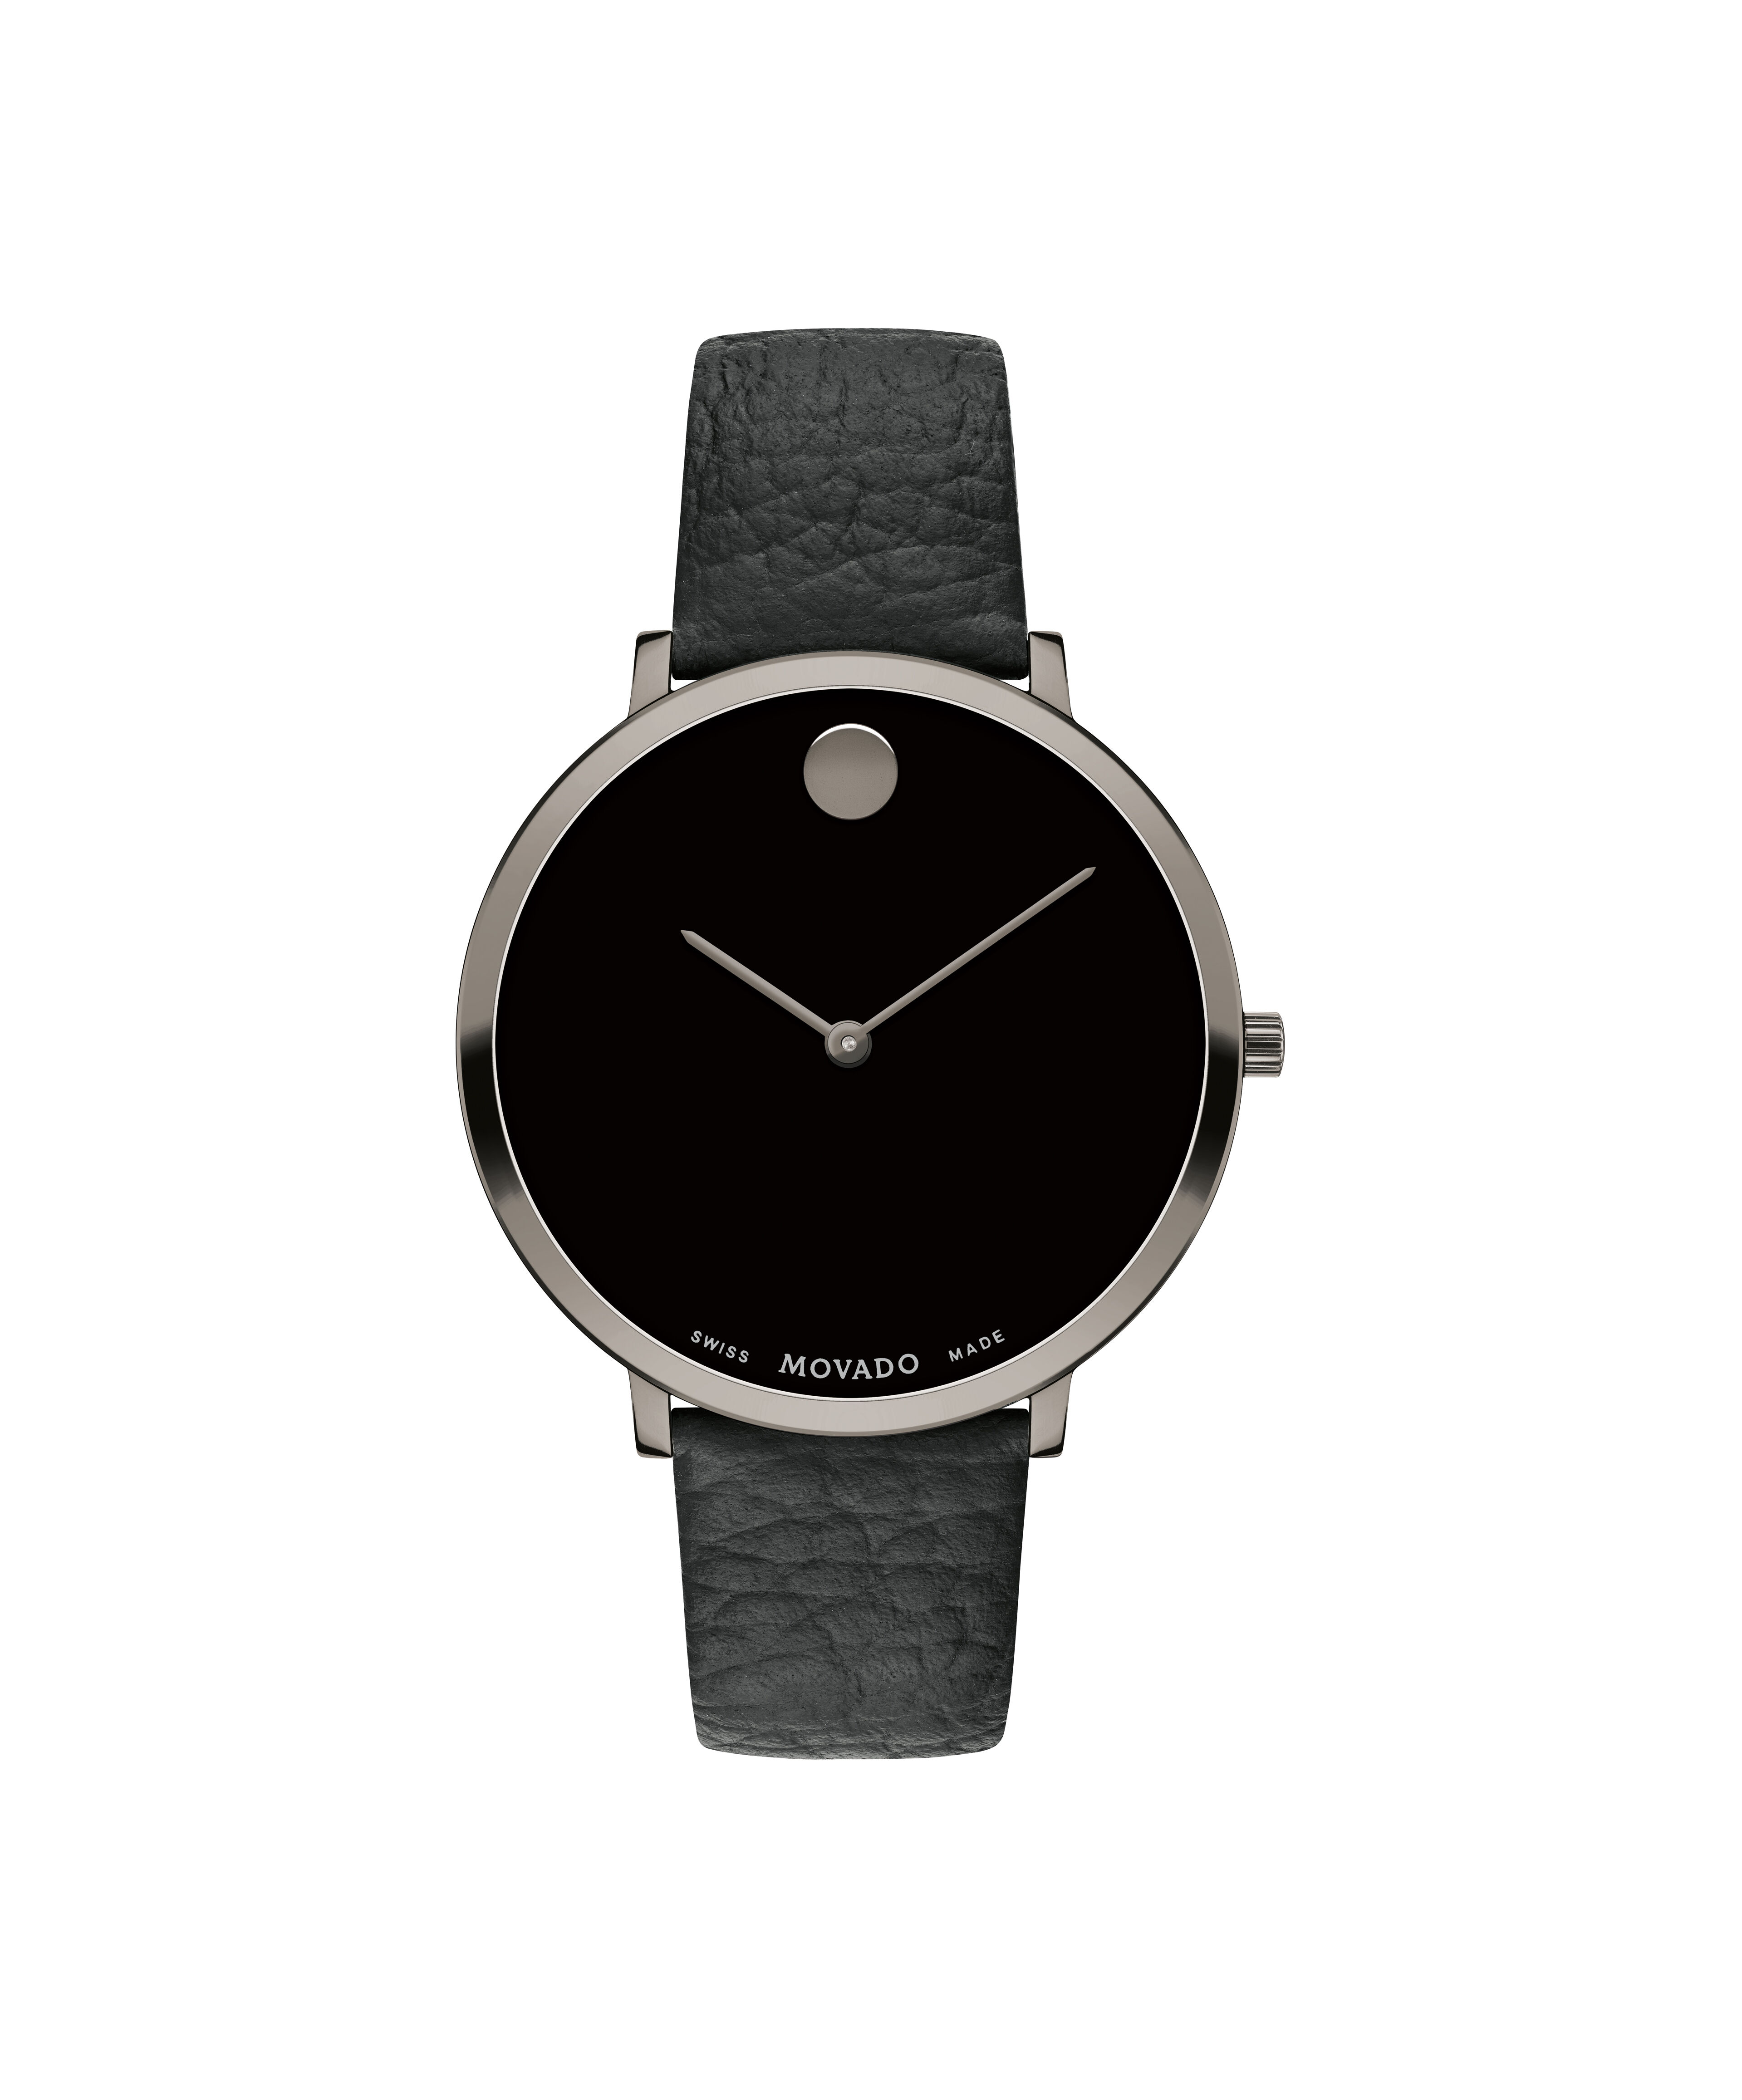 Replica Designer Watches Amazon